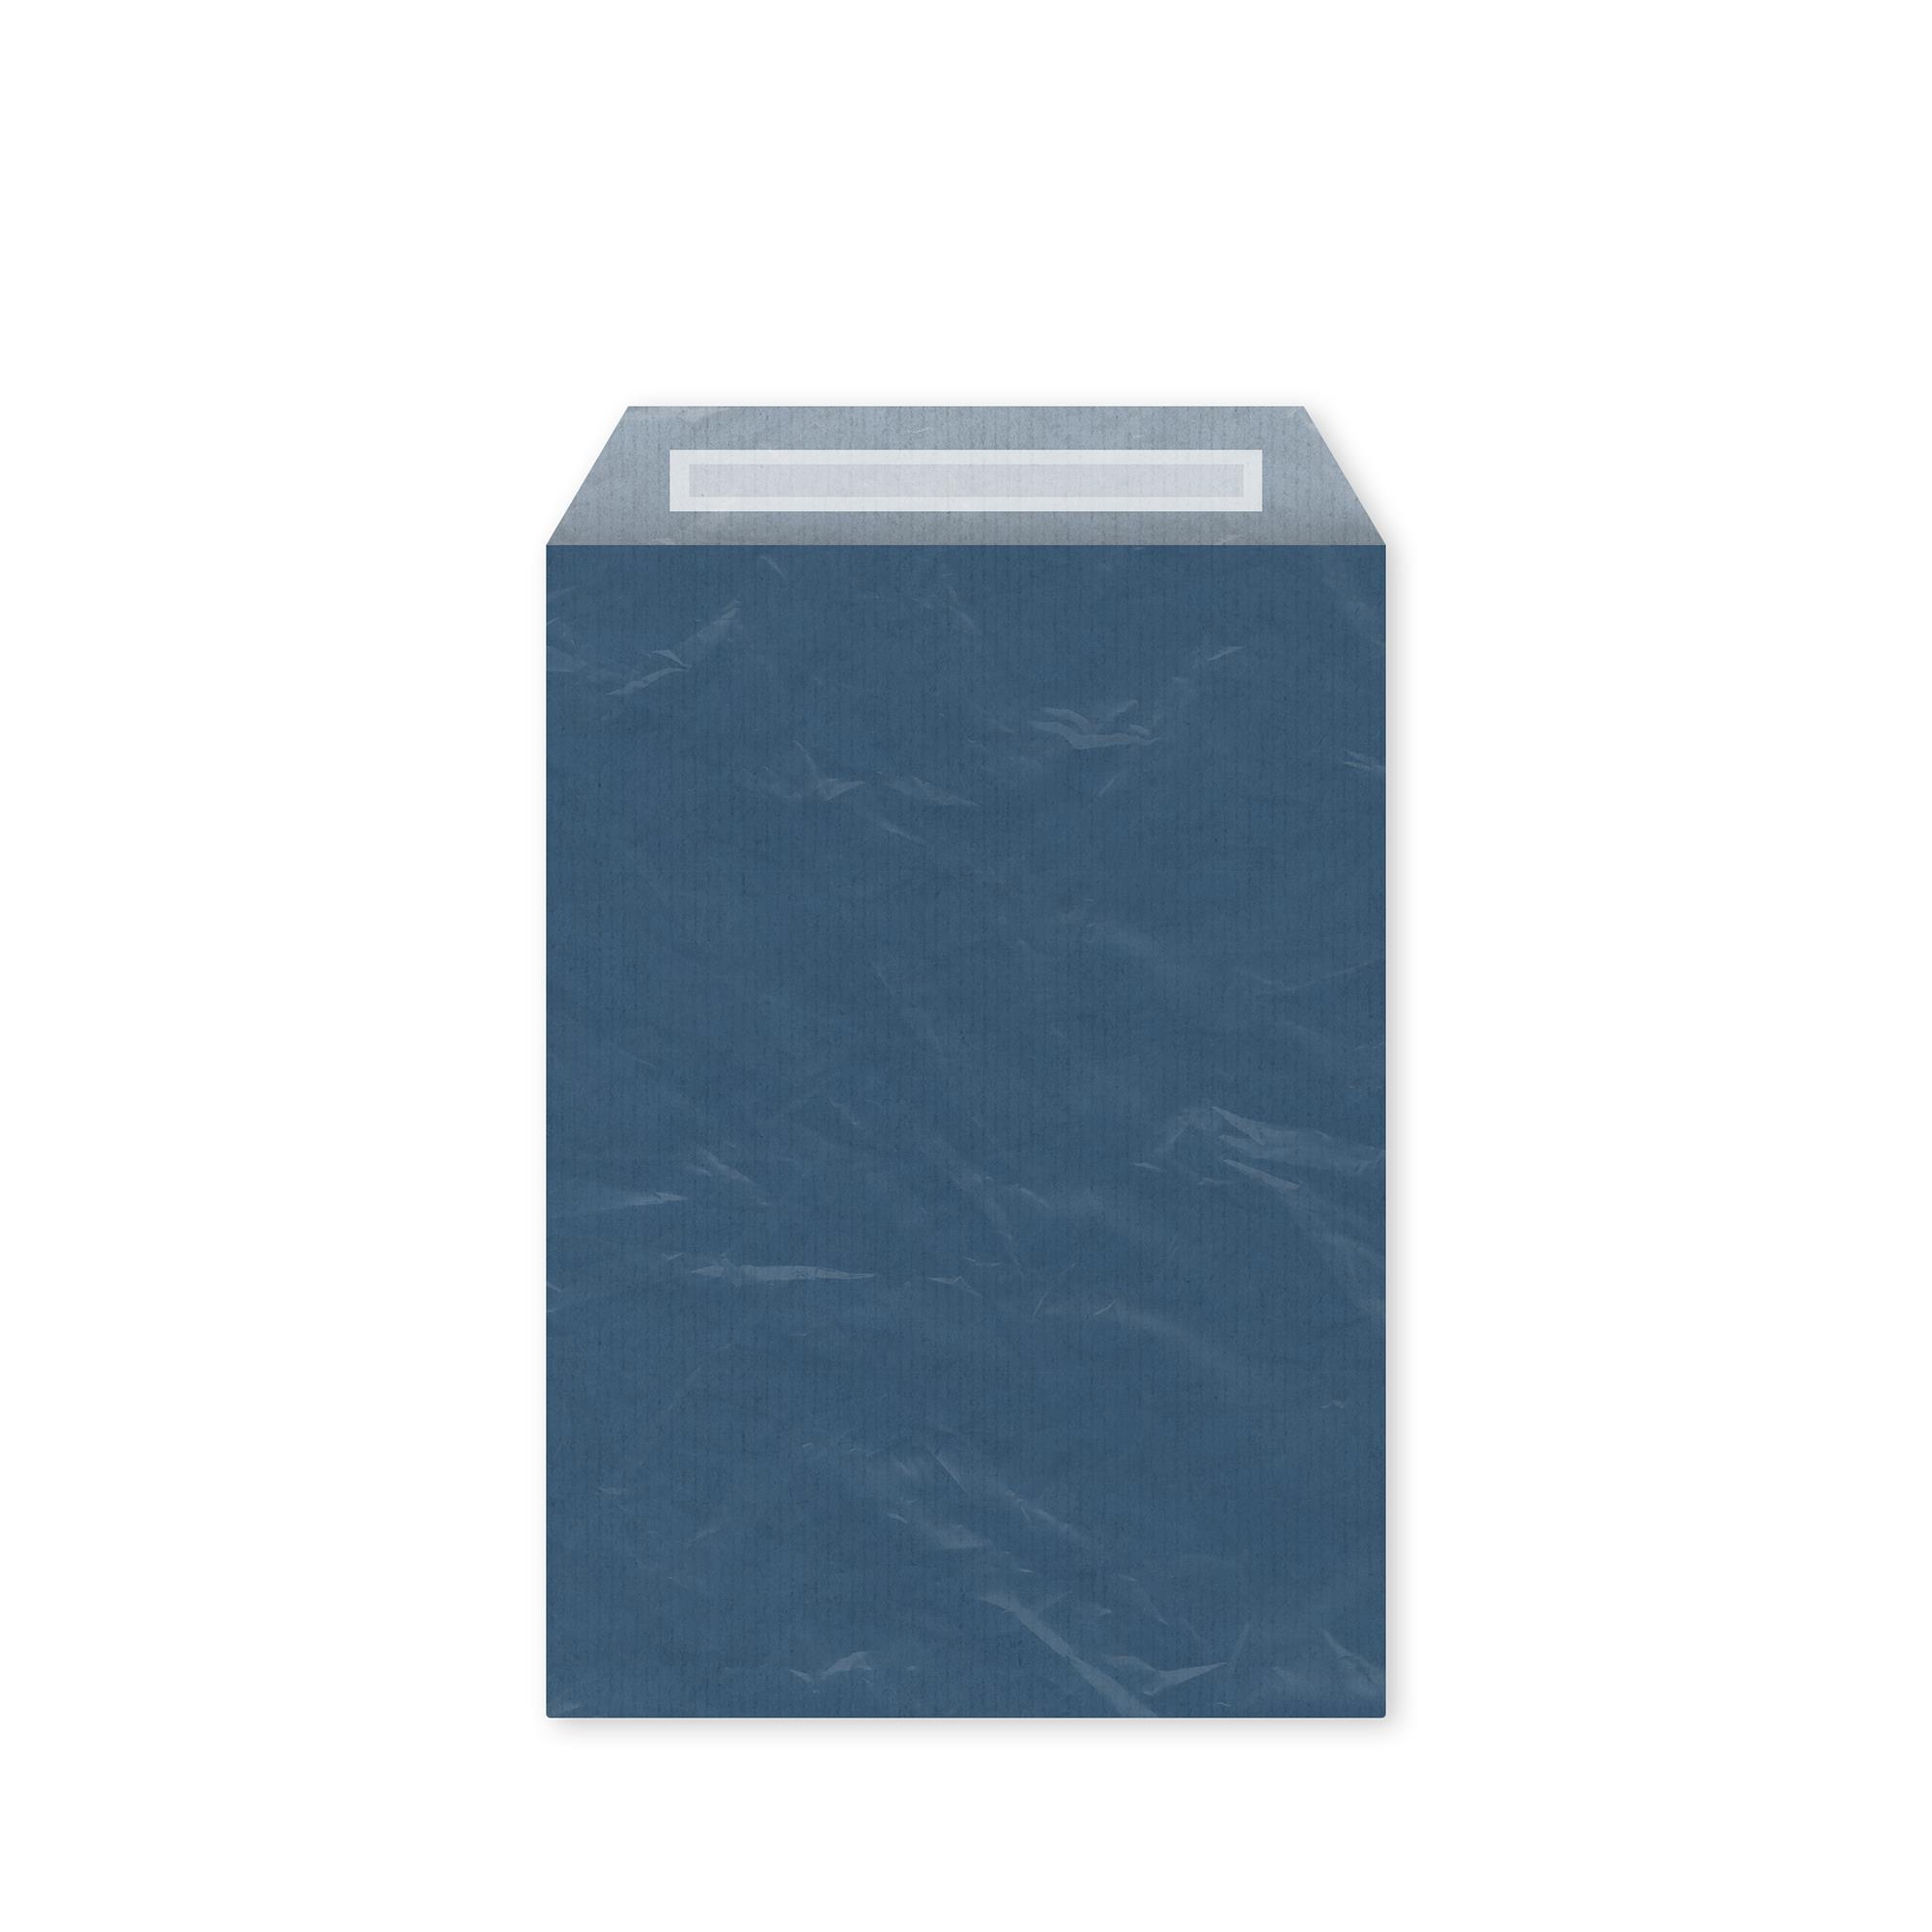 Bantlı Hediye Paketi Kağıt Mavi 20x6x25,5 cm - 25 Adet